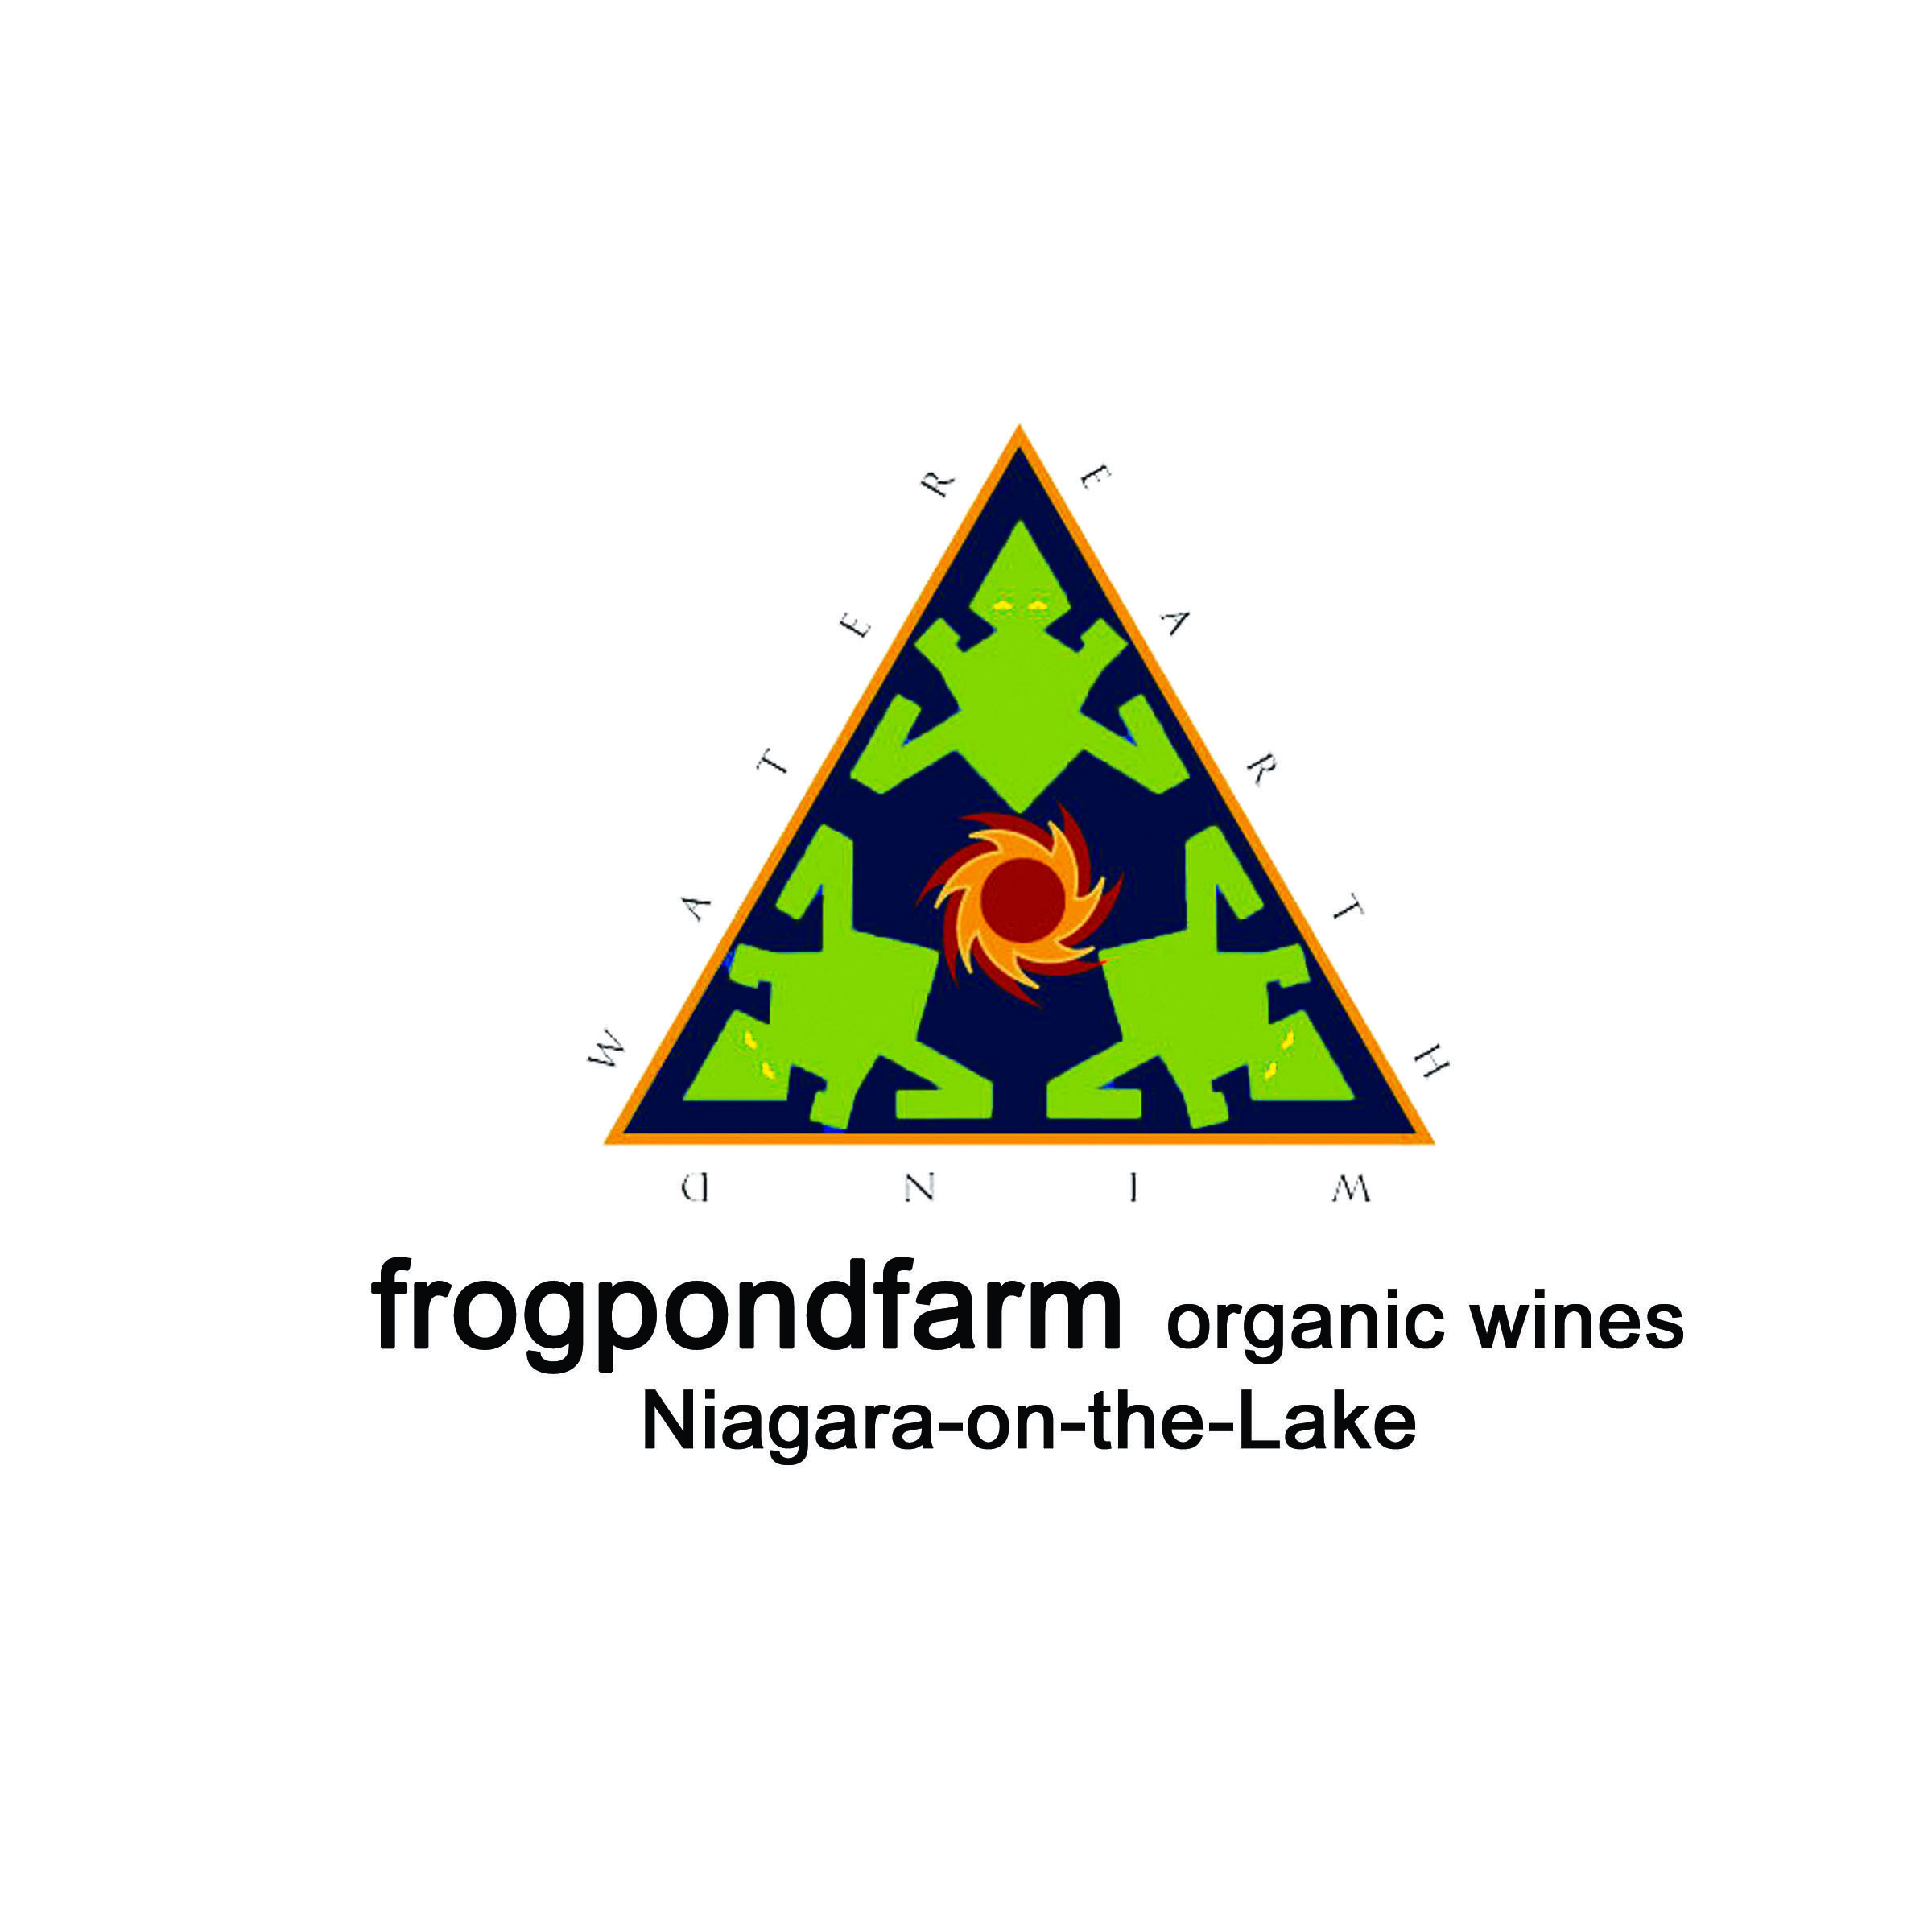 Frogpond Farm